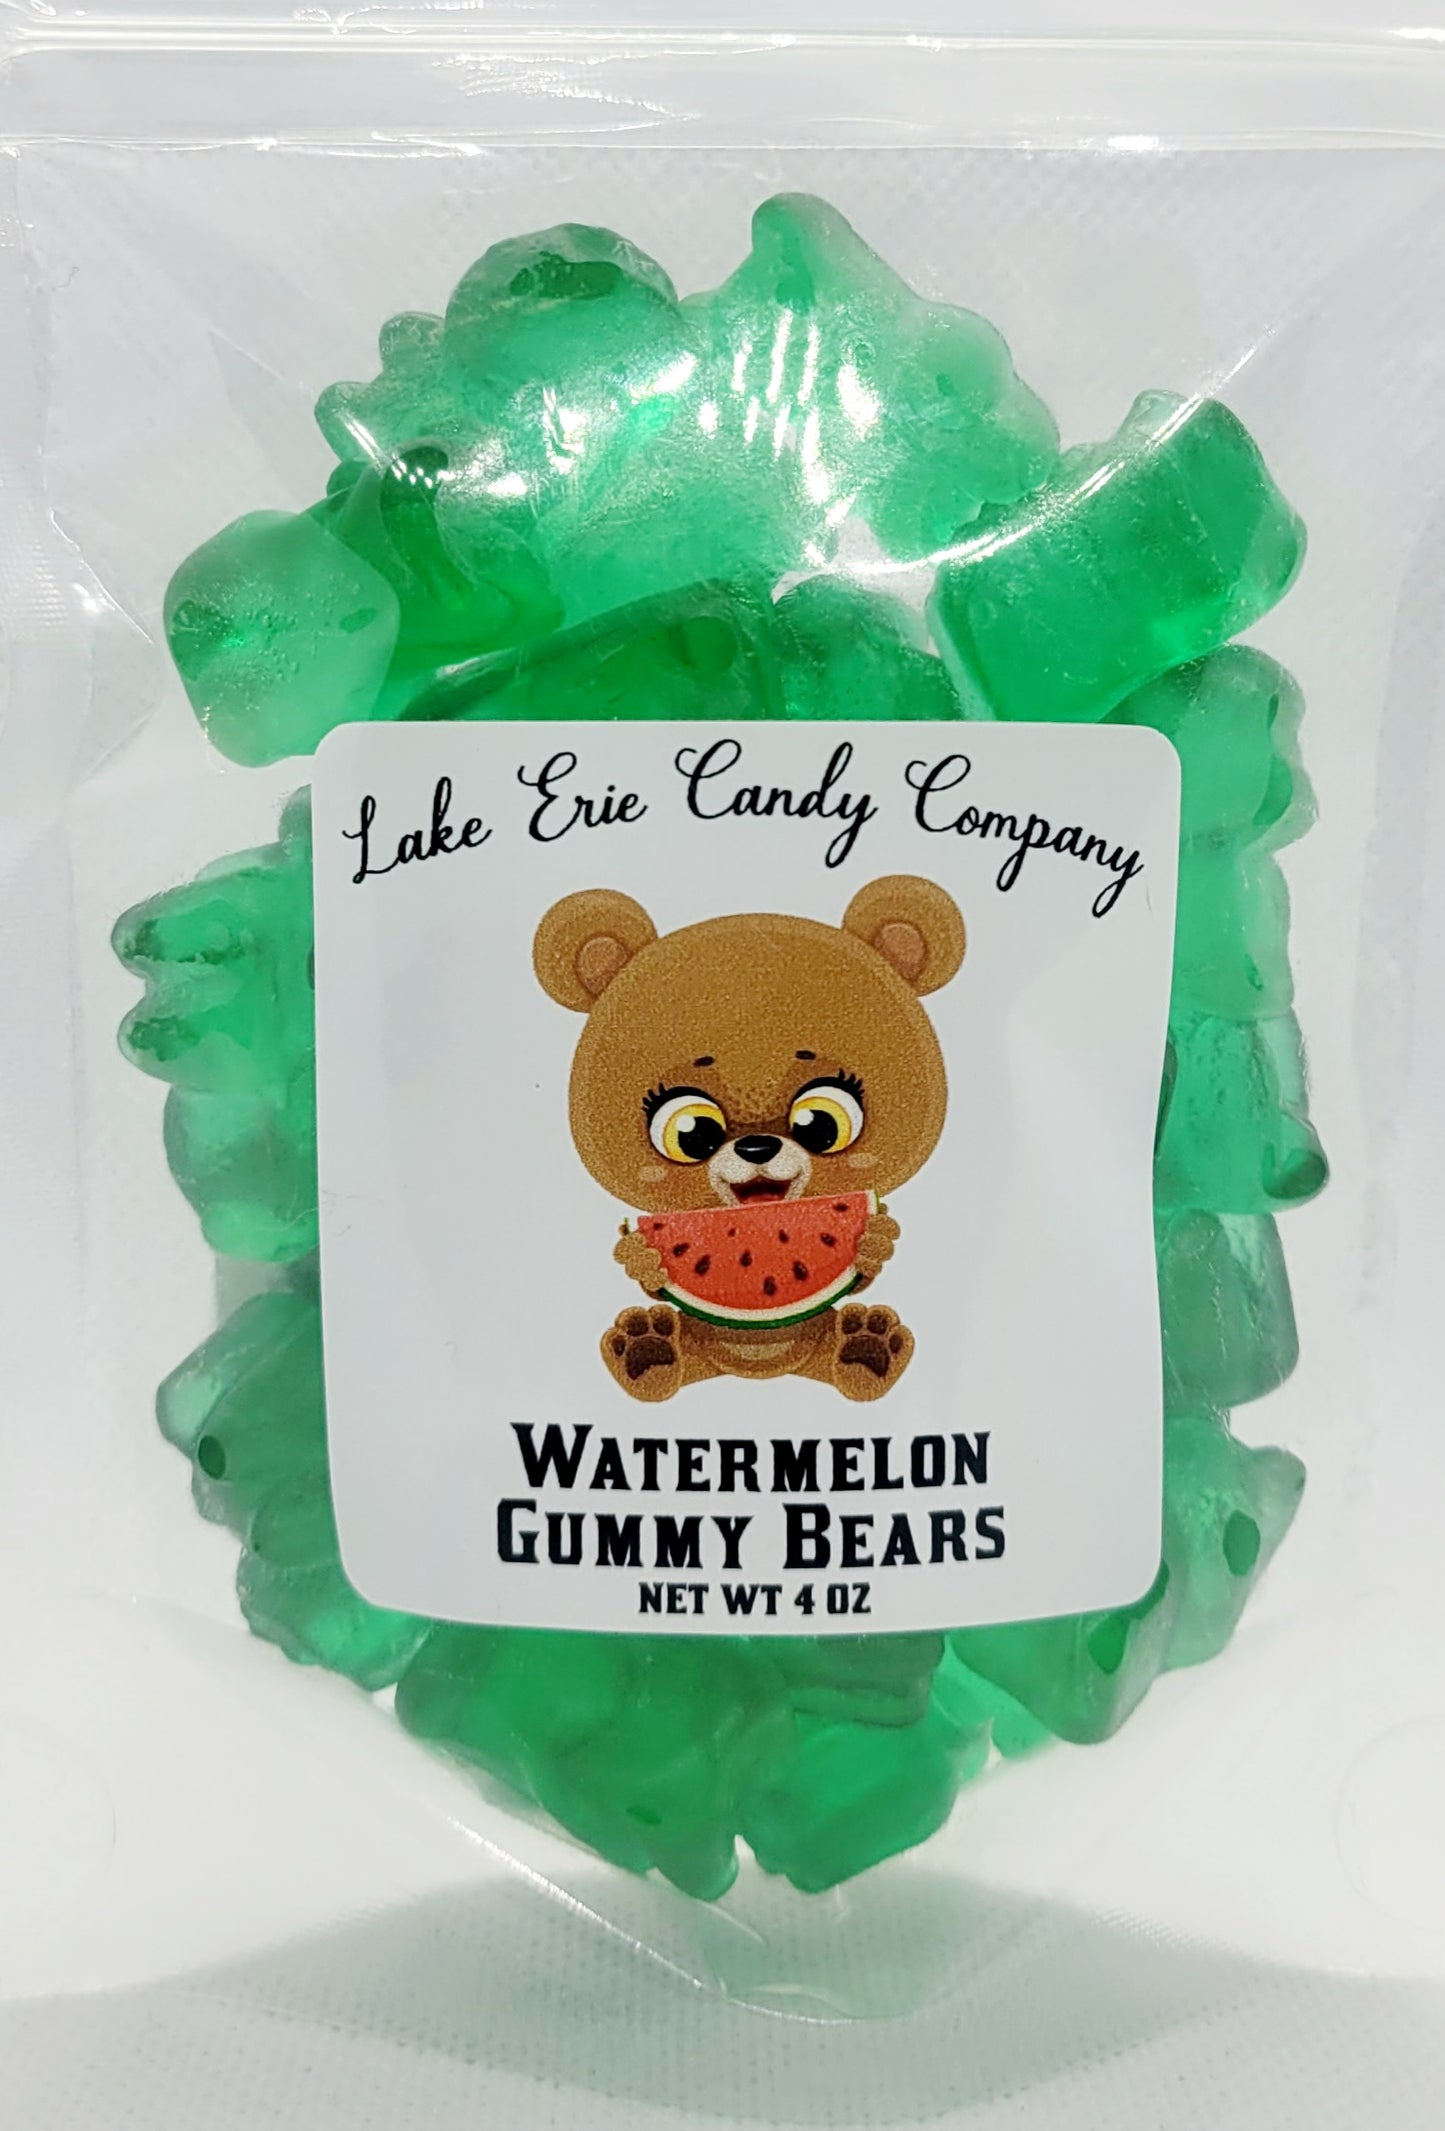 Watermelon Gummy Bears